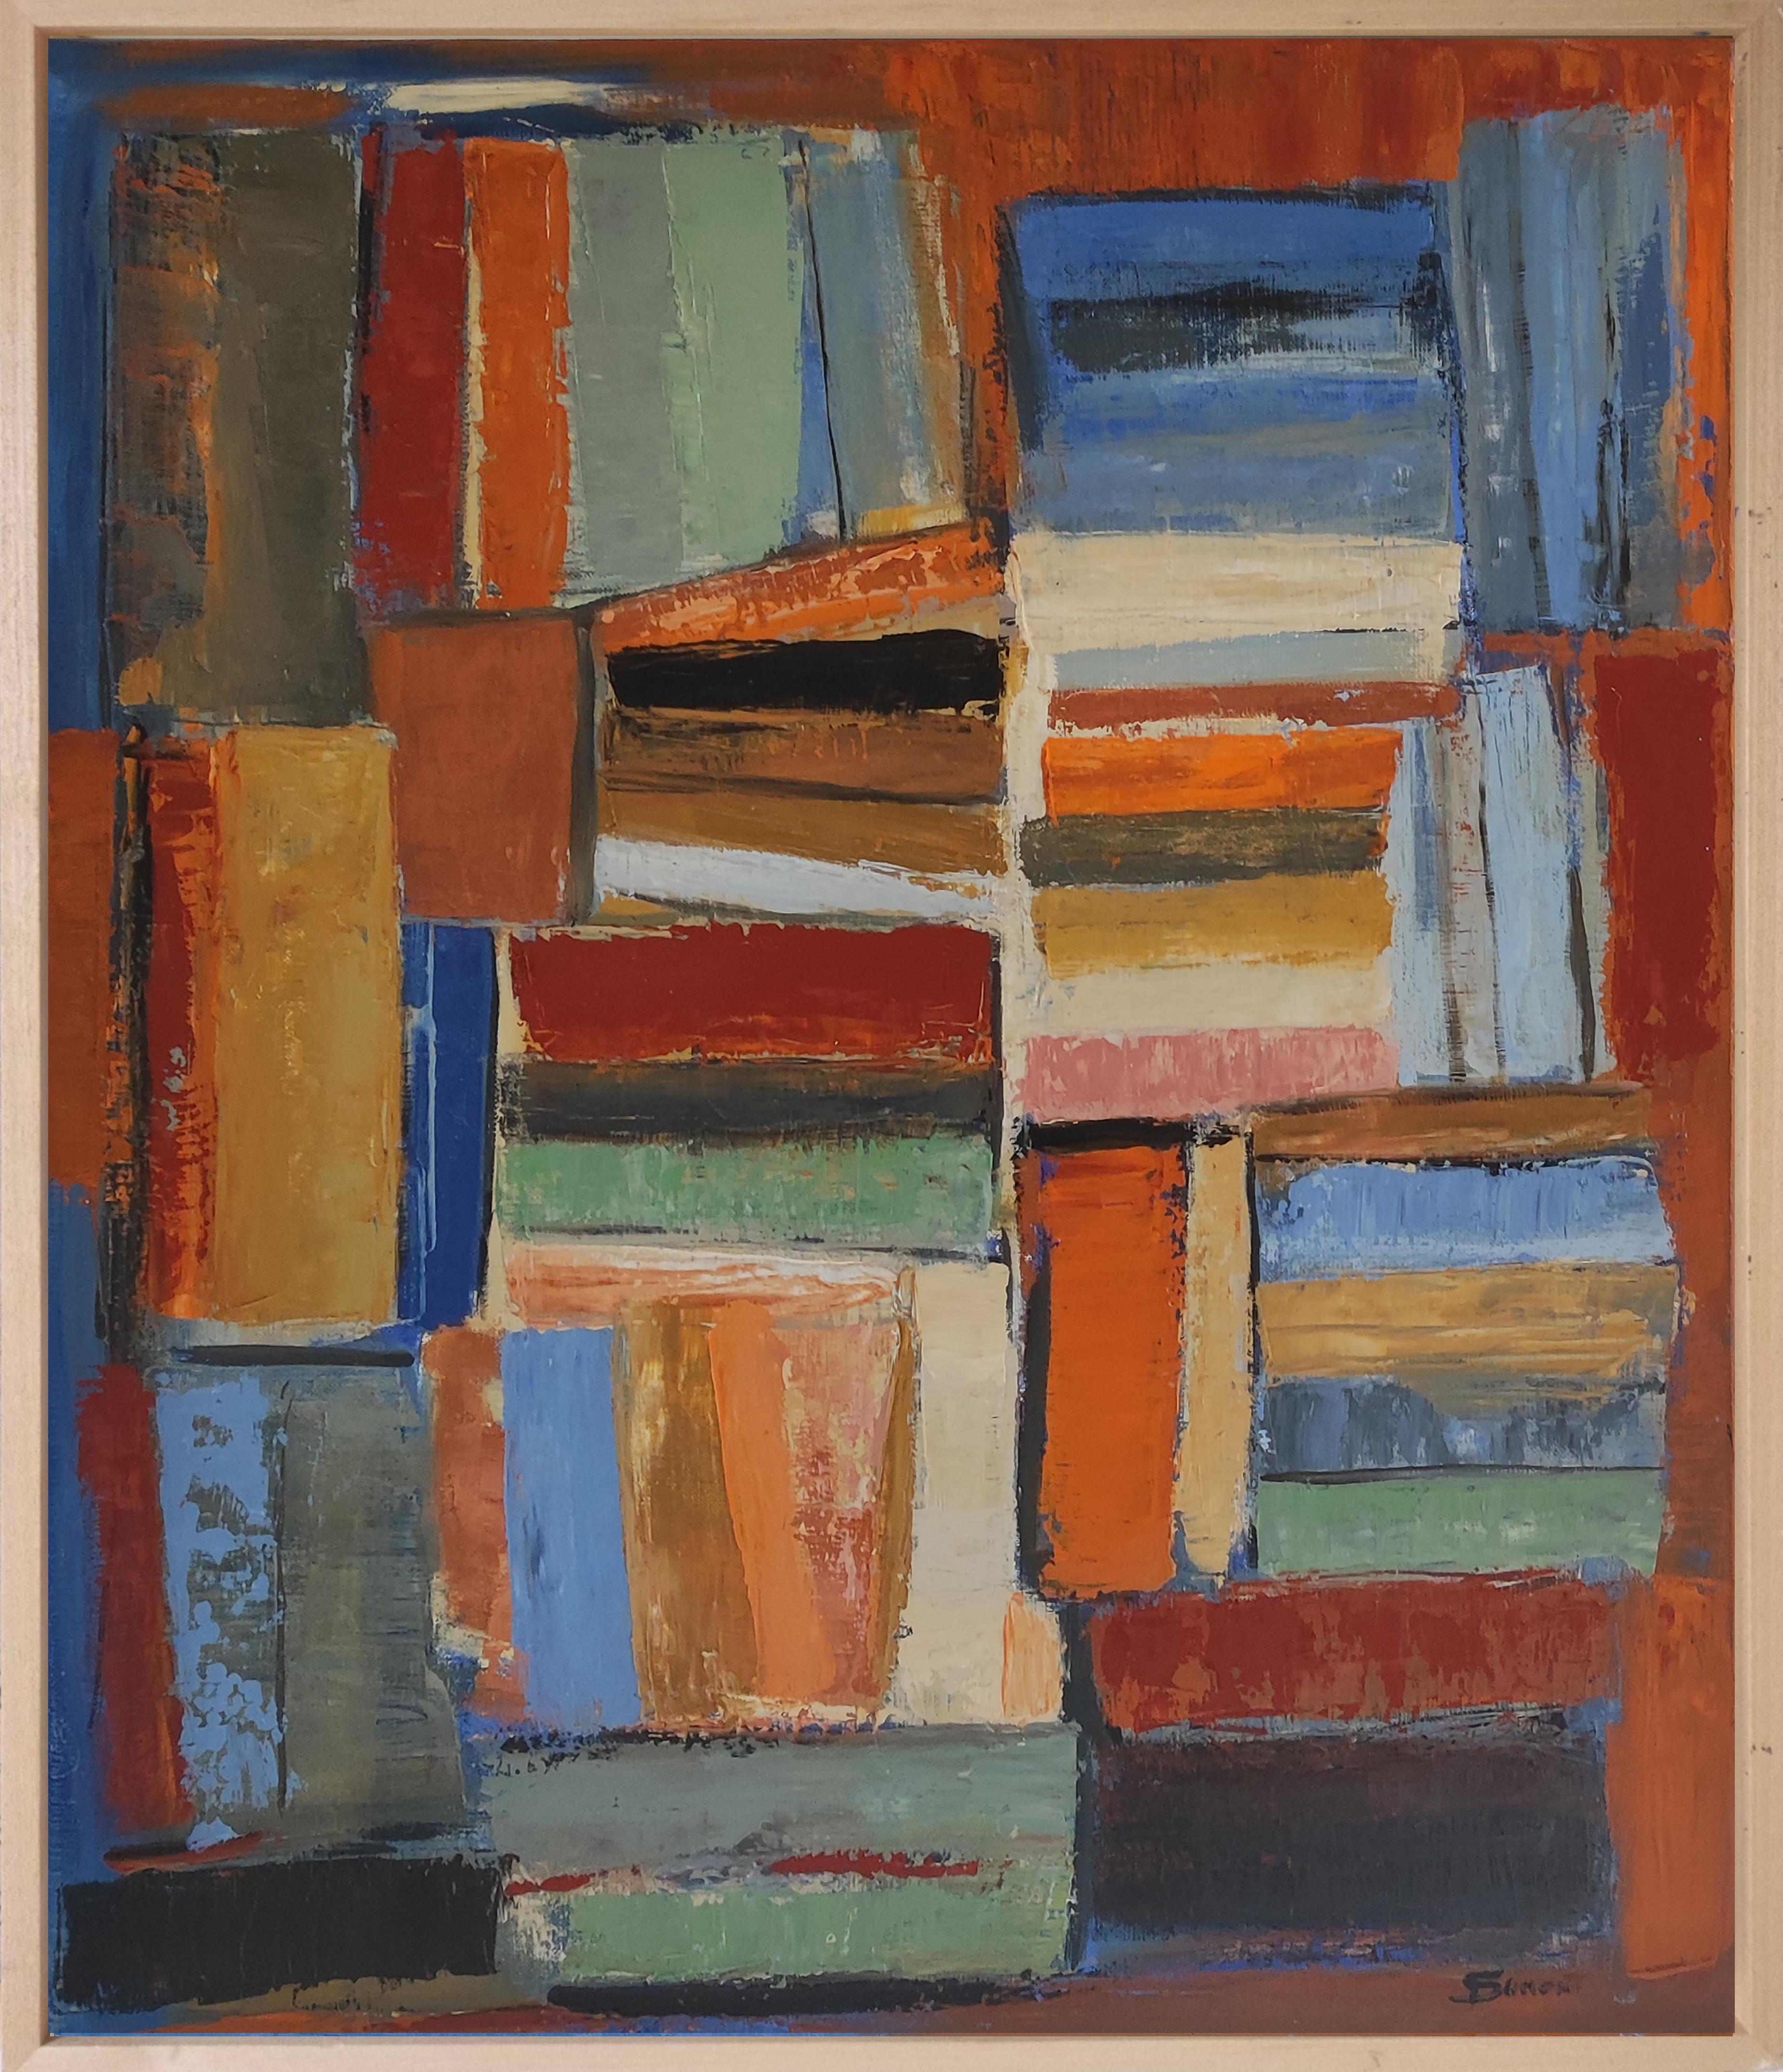 SOPHIE DUMONT Abstract Painting – Harmony/2, farbig abstrakt, Bücher, Öl auf Leinwand, Expressionismus, Geometrie 